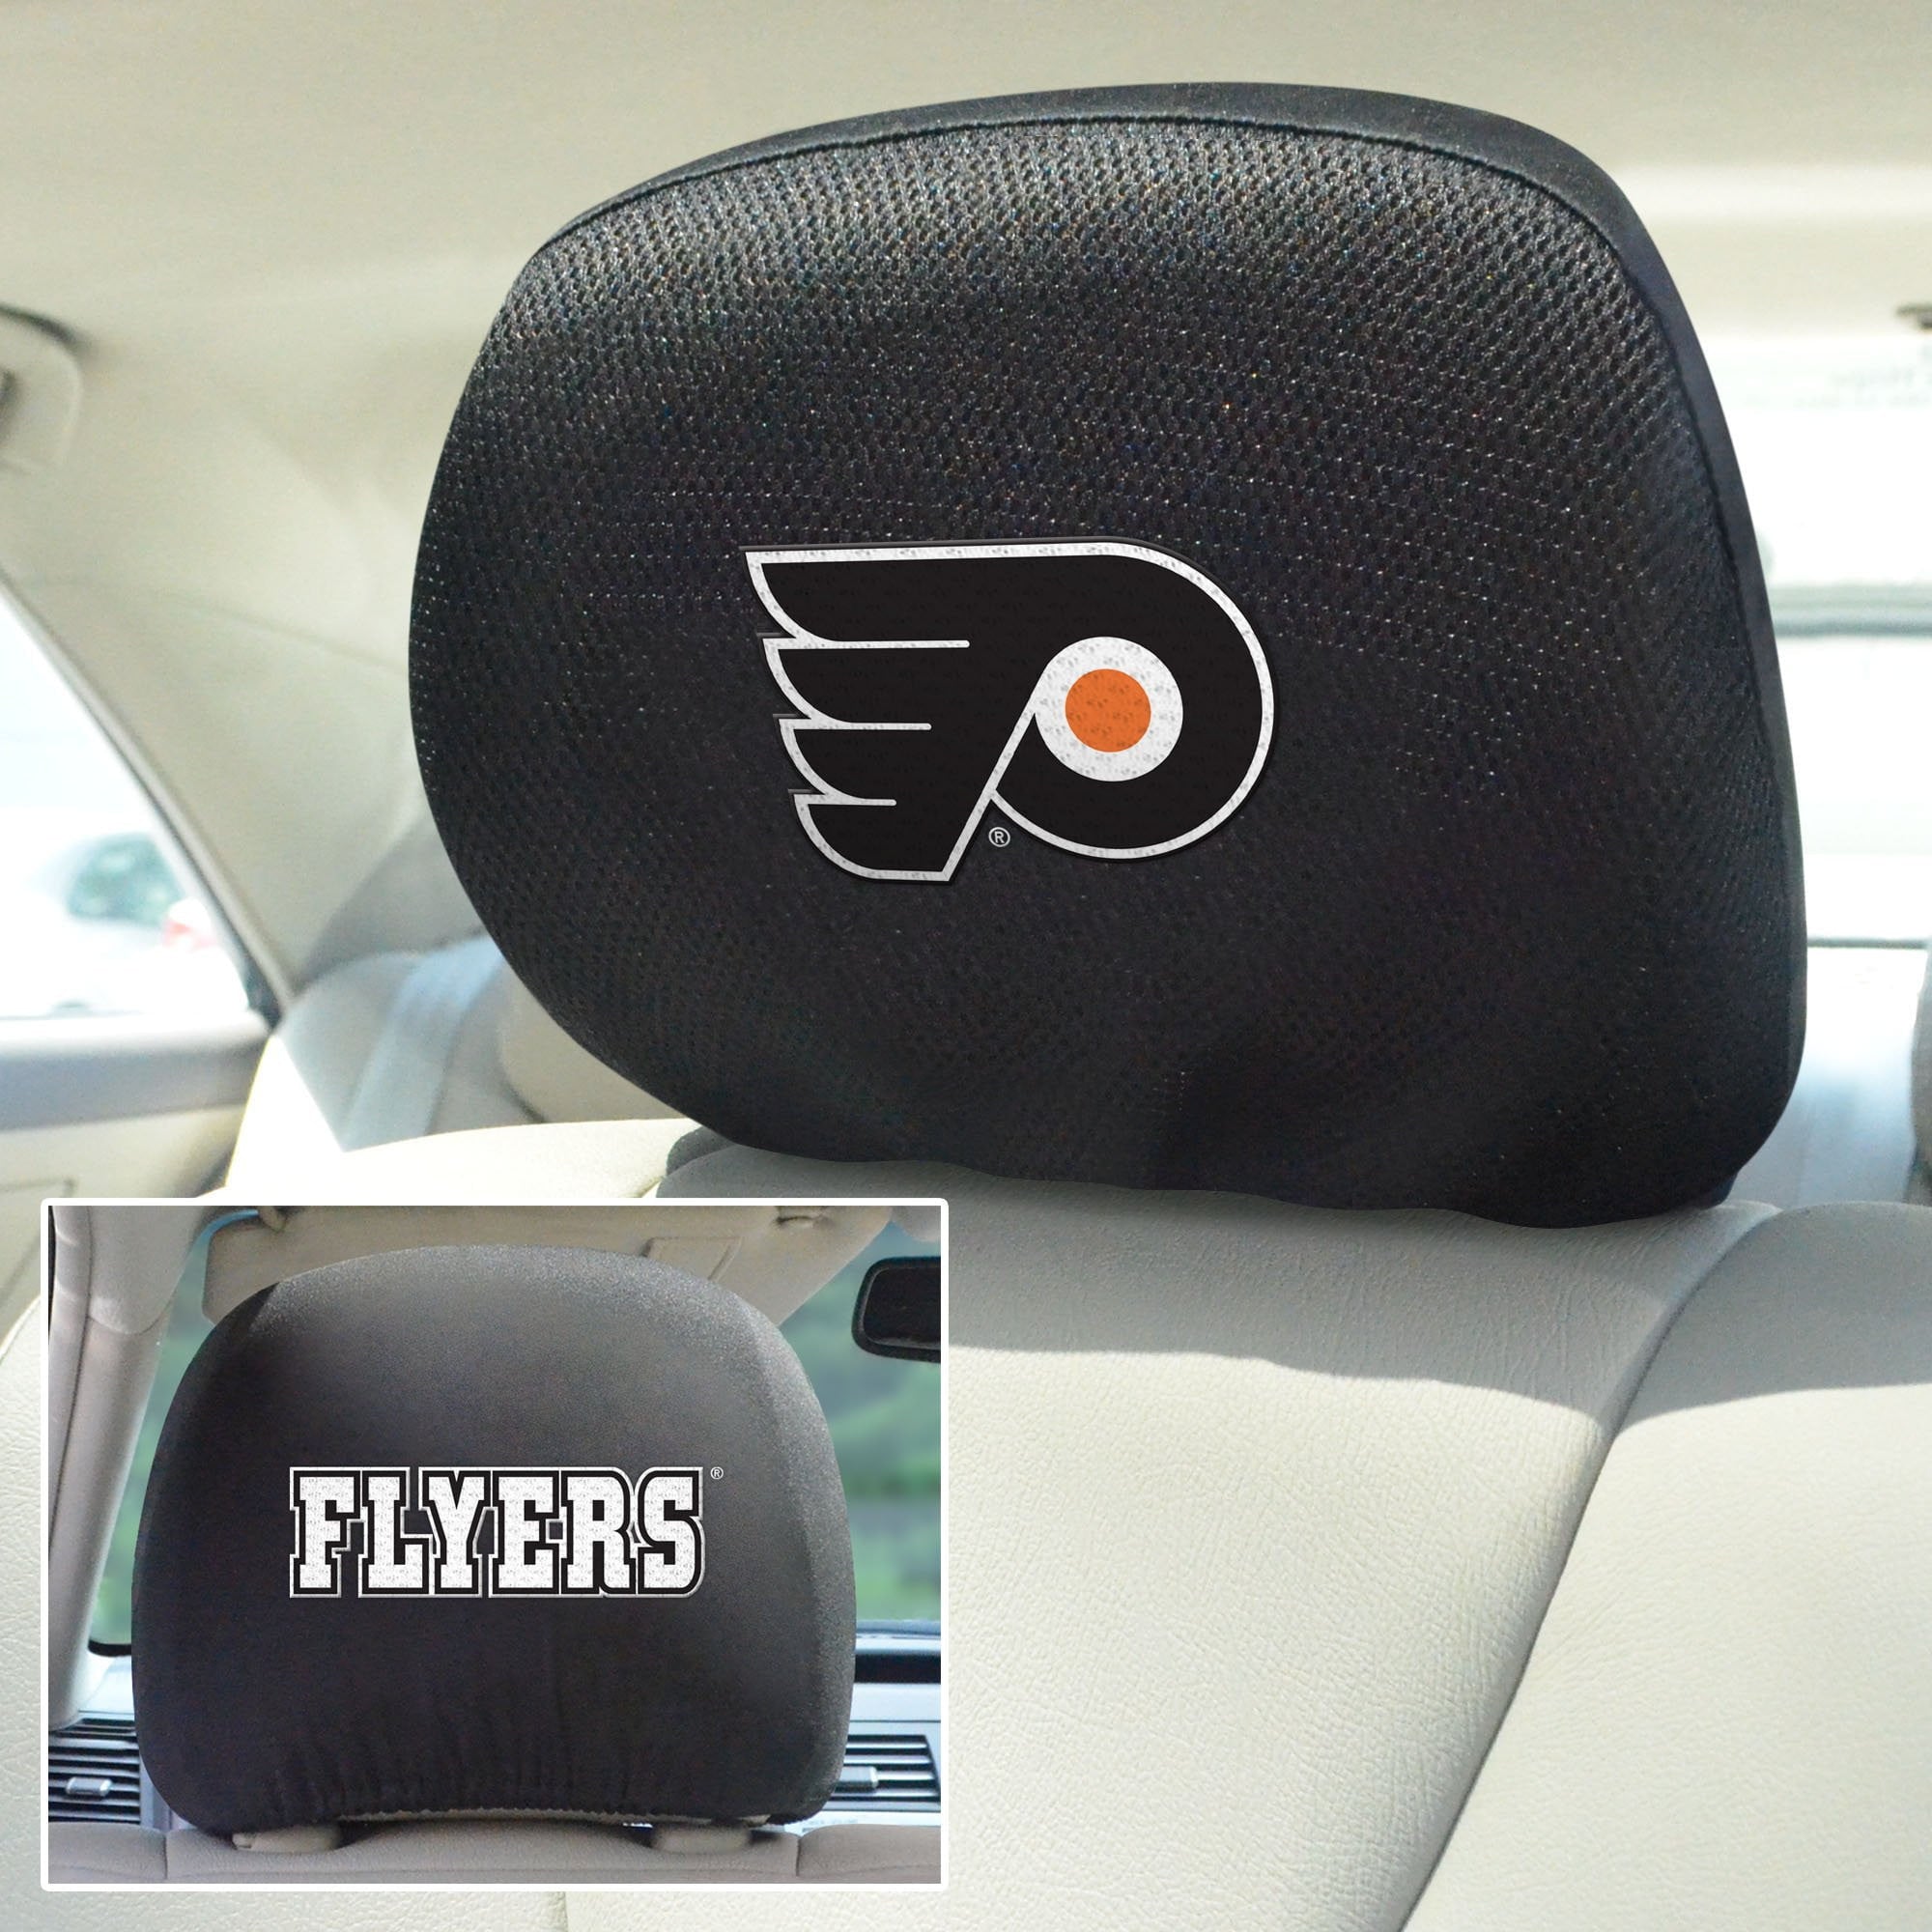 NHL - Philadelphia Flyers Set of Set of 2 Headrest Covers